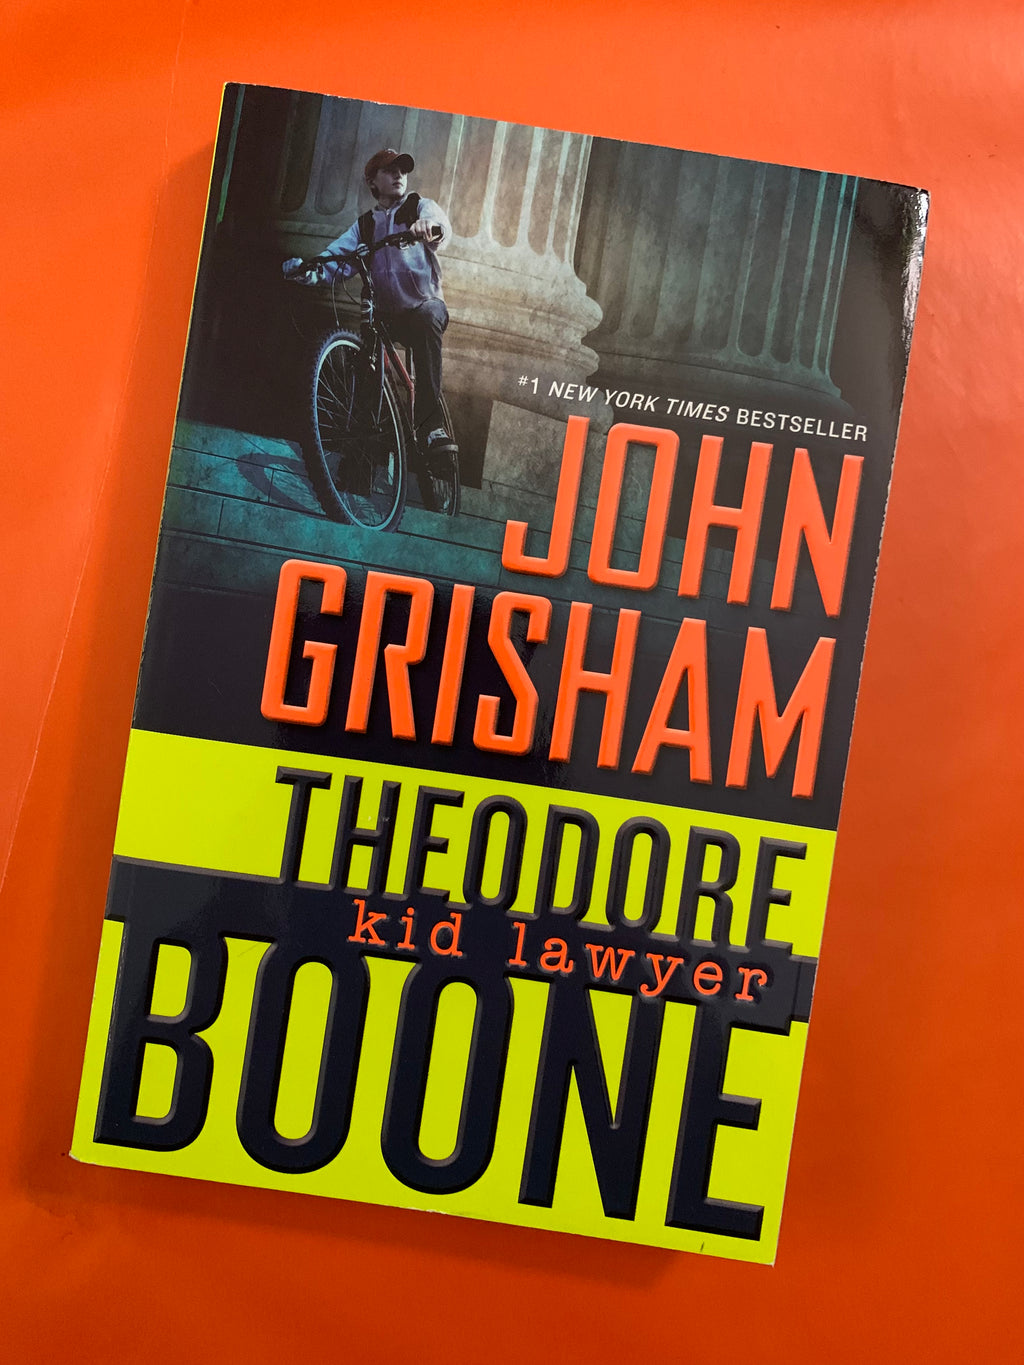 Theodore Boone: Kid Lawyer- By John Grisham